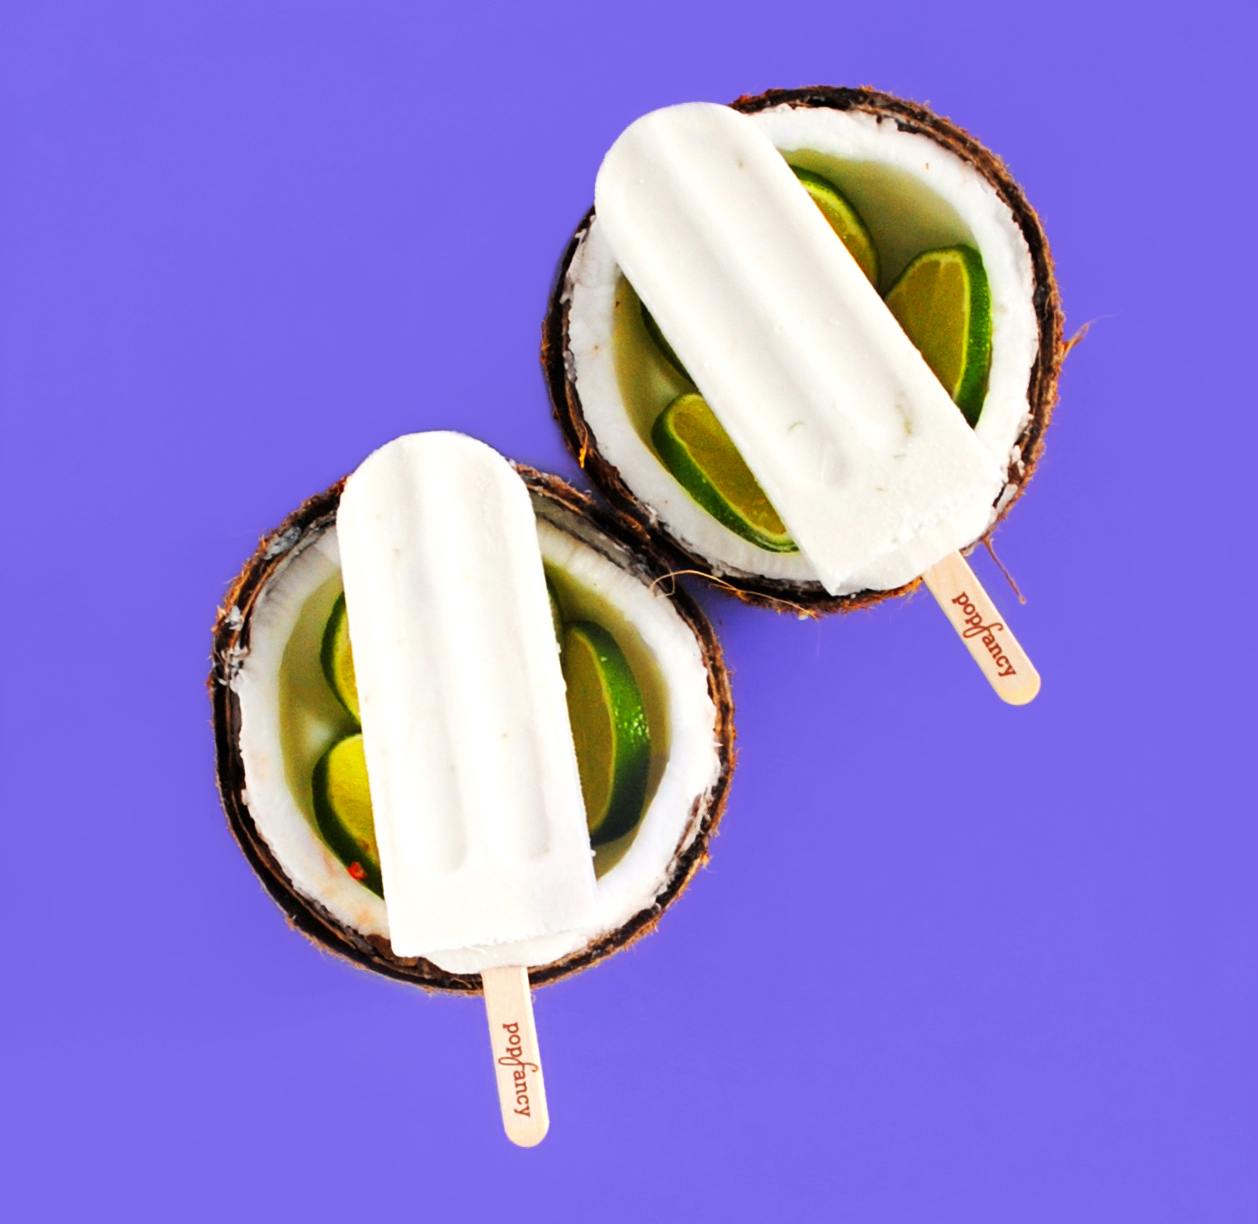 Wholesale wholesale popsicle sticks to Make Delicious Ice Cream